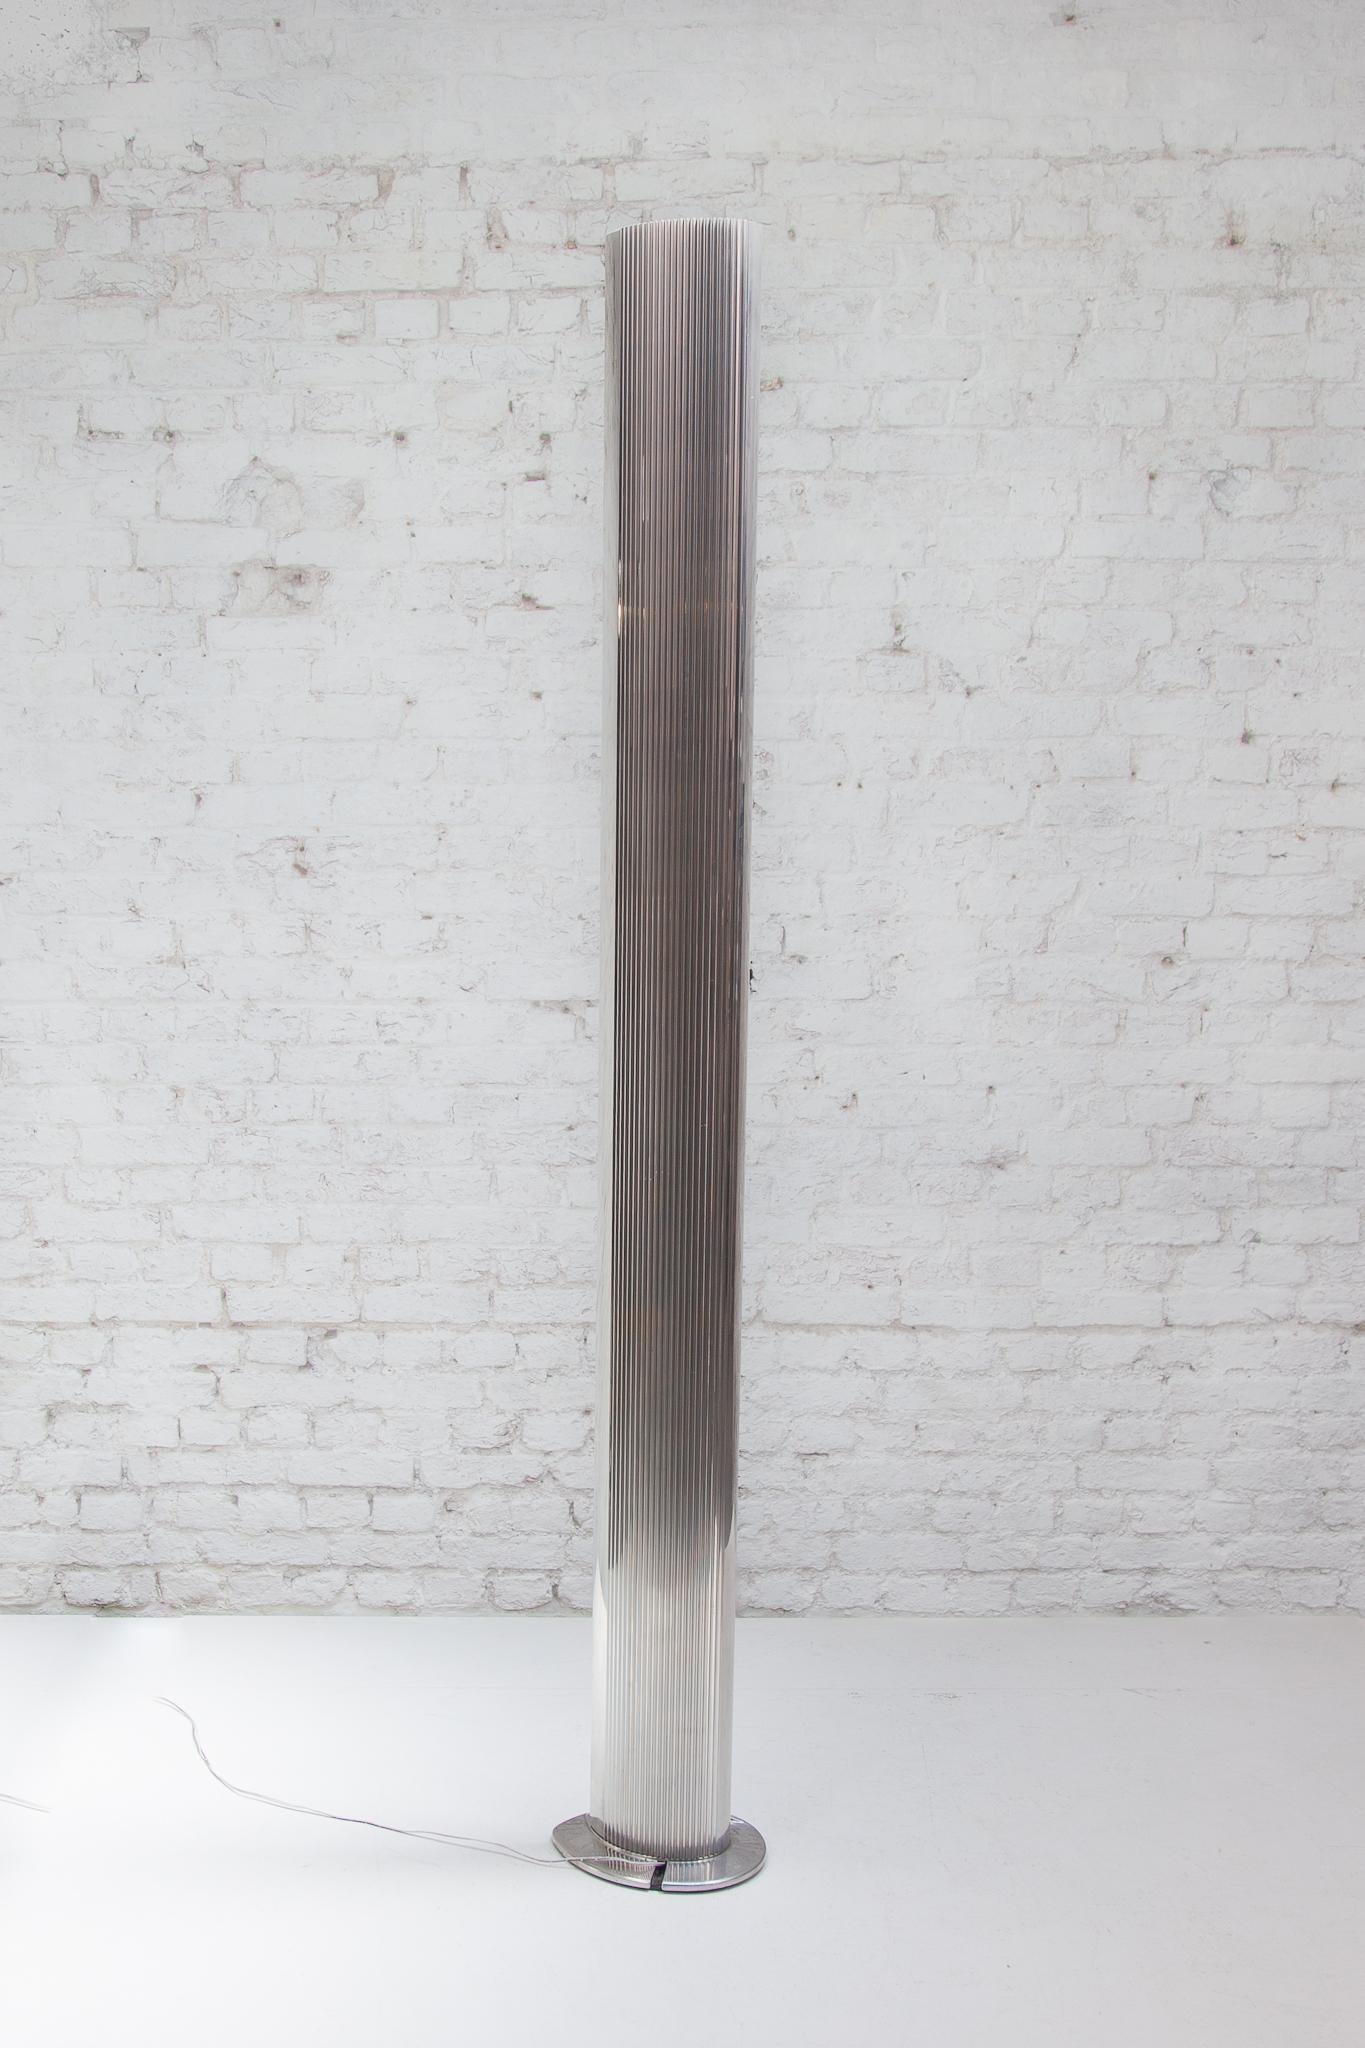 Aluminum 1980s Penombra Floor Lamp by Antoni Flores for Sargot Barcelona For Sale 3